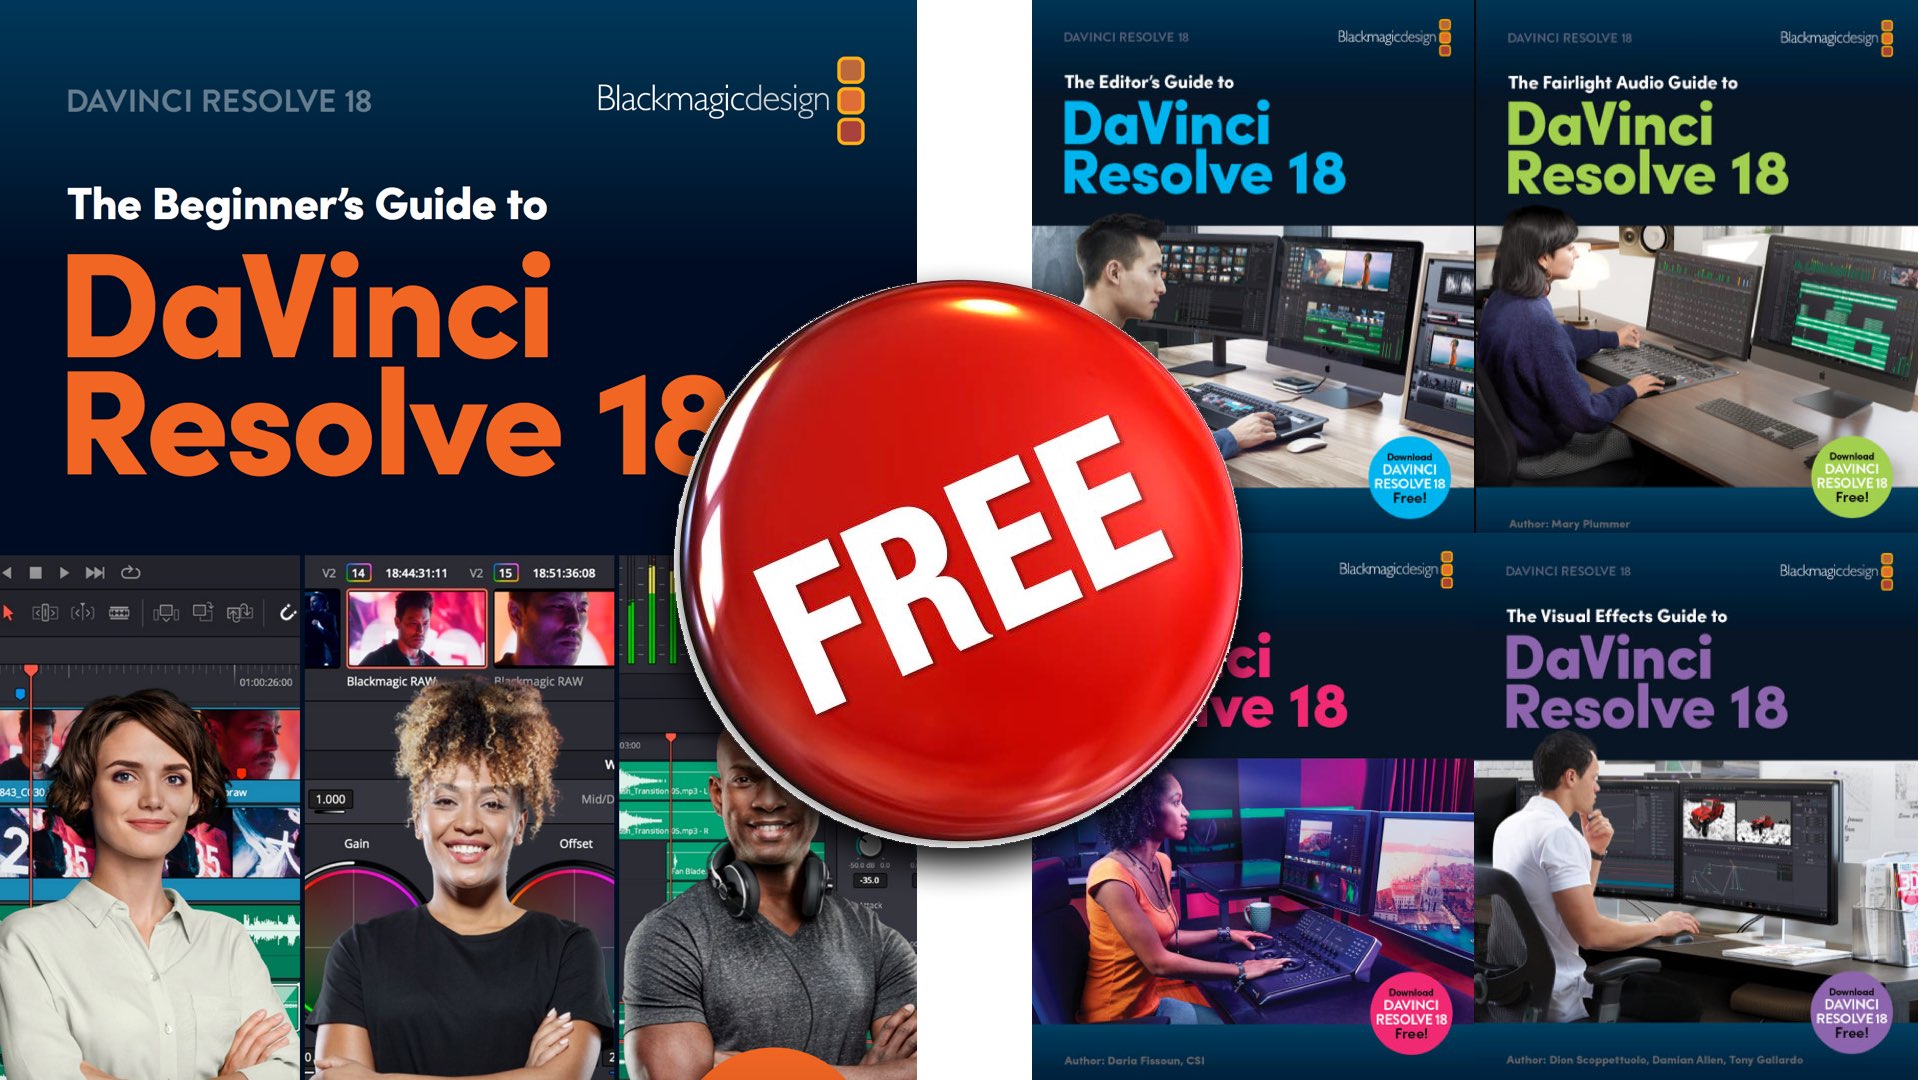 DaVinci Resolve 18: Download Free Guides by Blackmagic - YMCinema - News & Insights on Digital Cinema